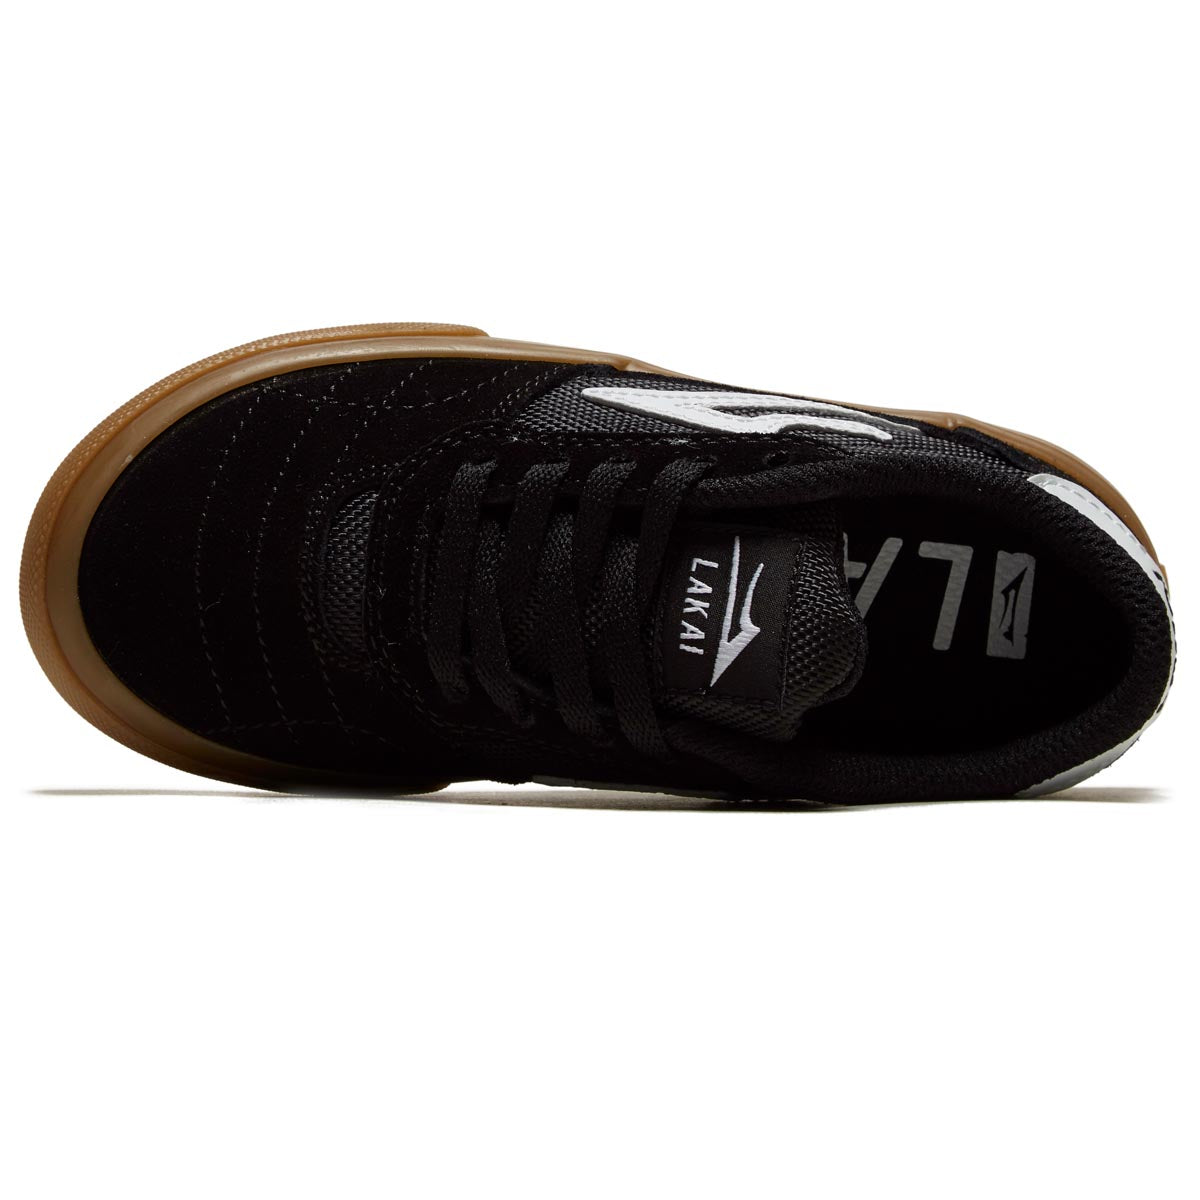 Lakai Youth Cambridge Shoes - Black/Gum Suede image 3